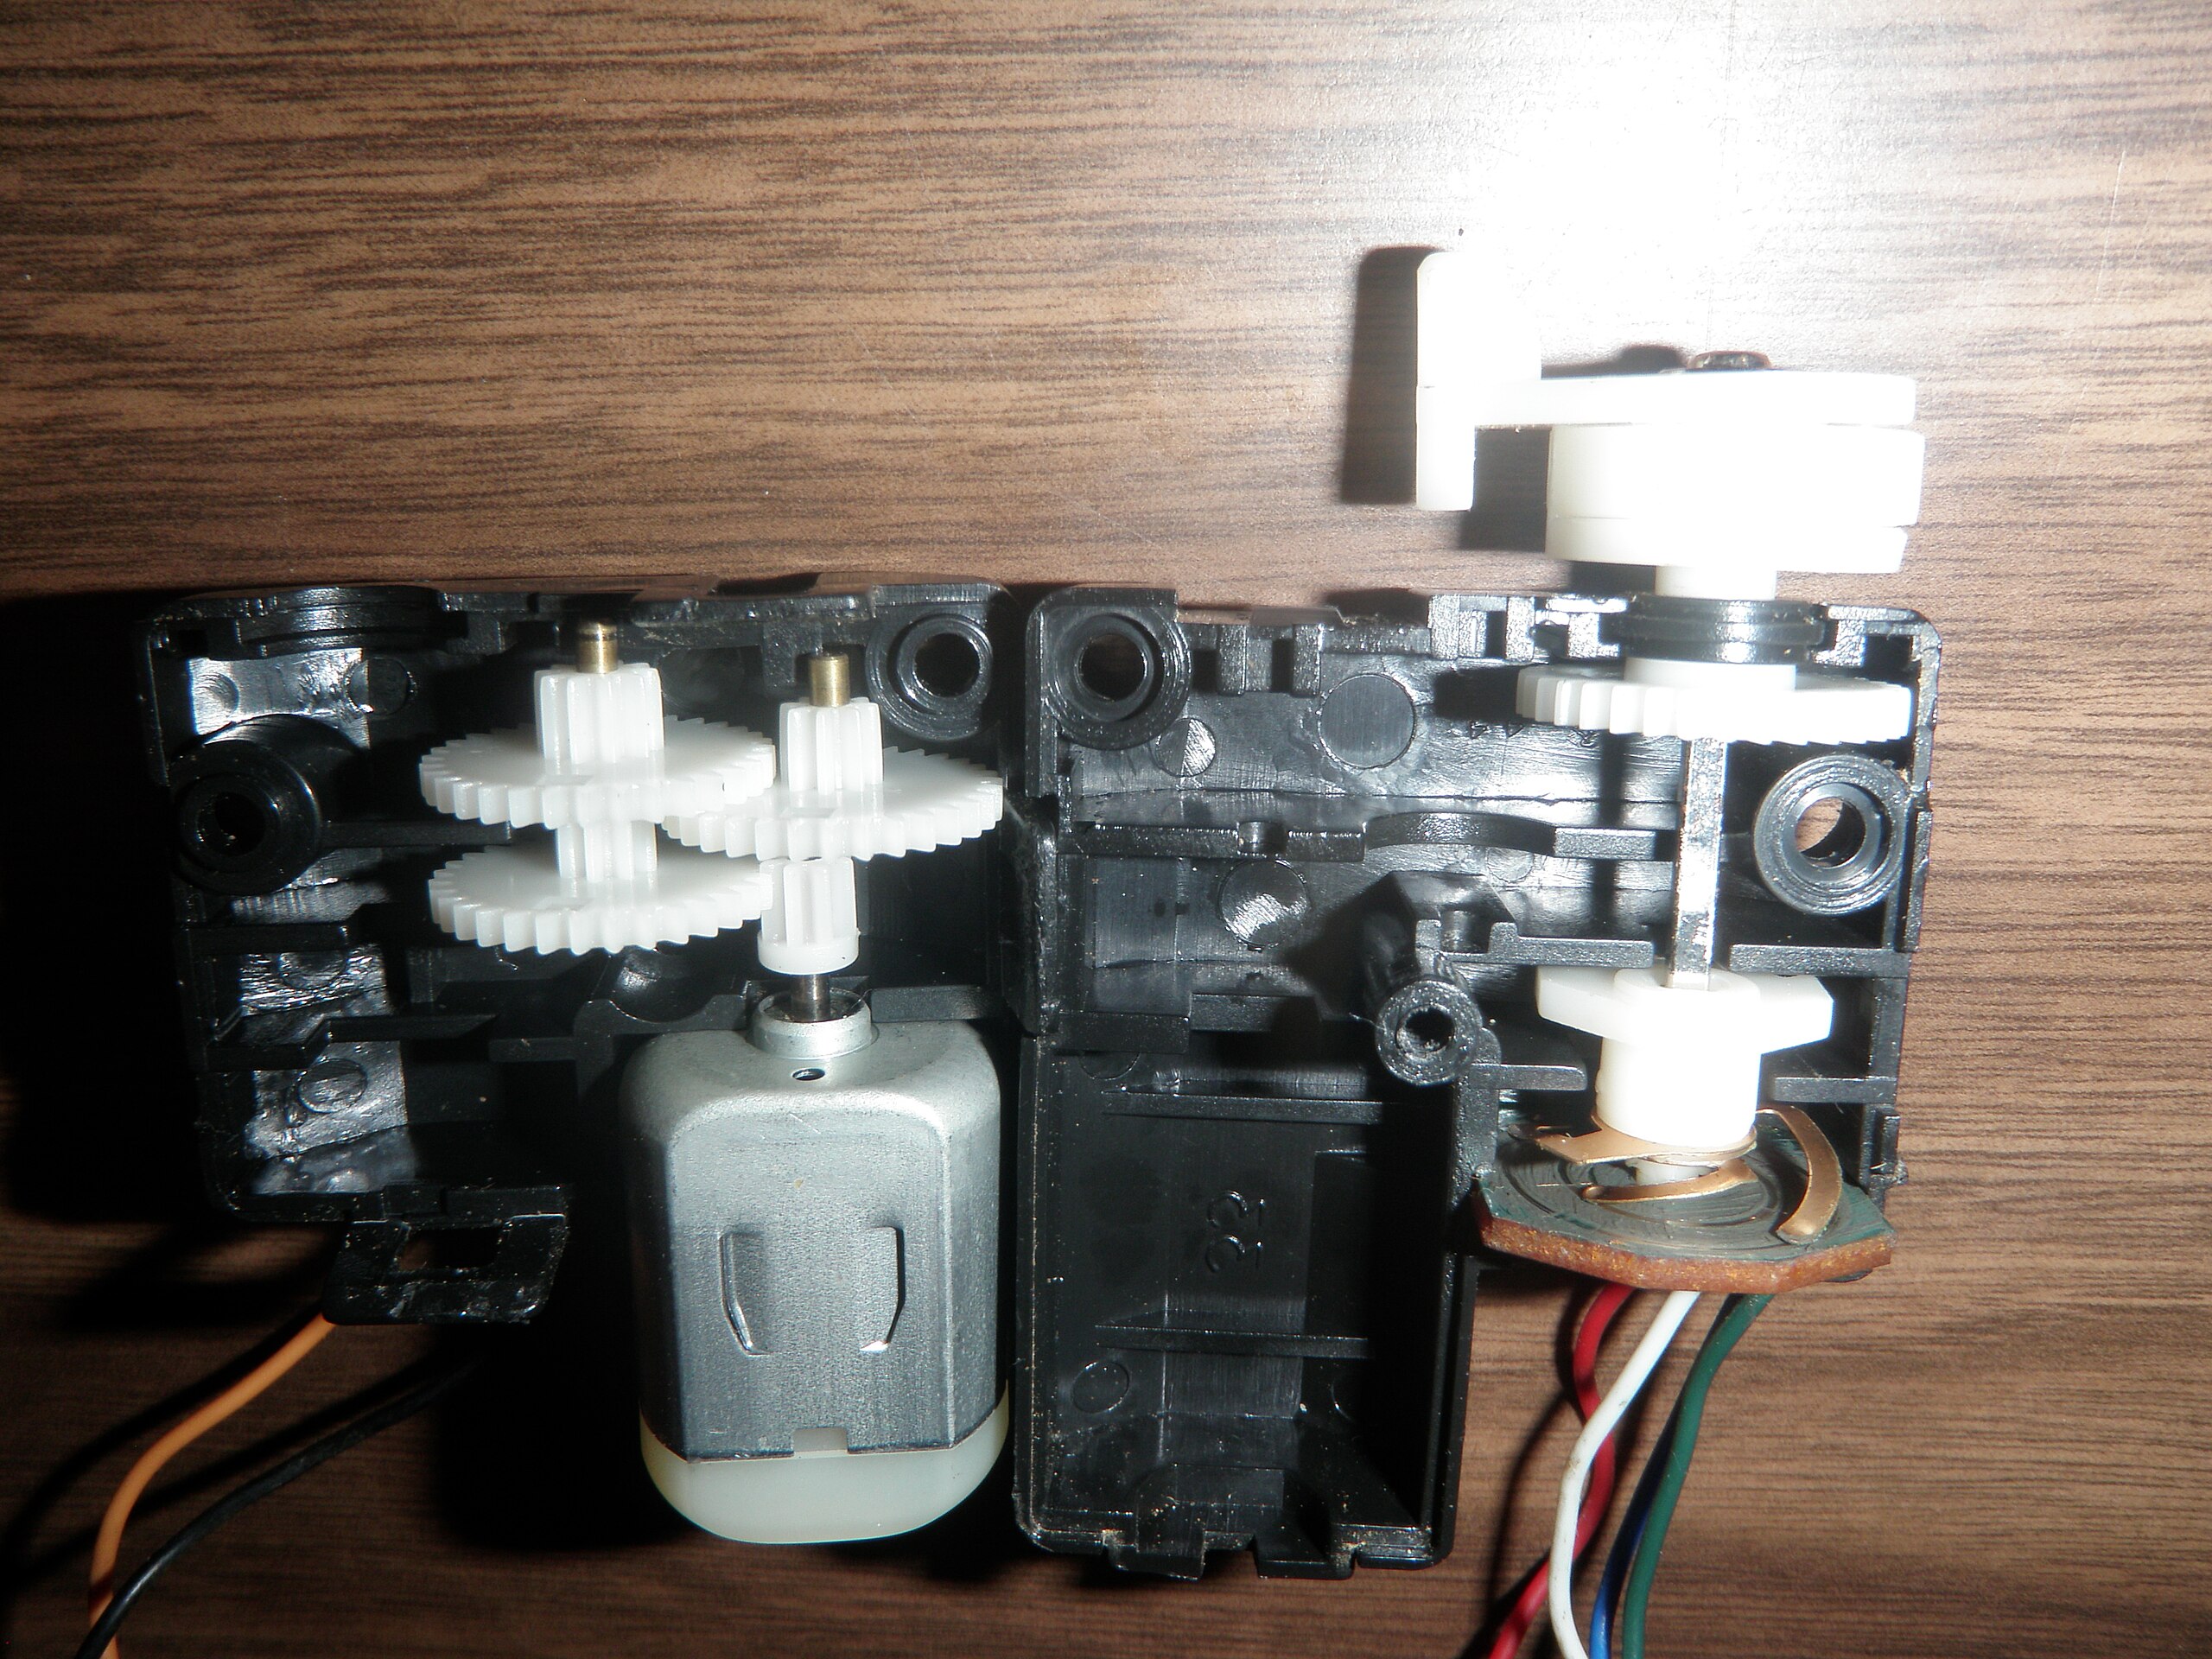 File:Inside a servo motor.JPG - Wikimedia Commons